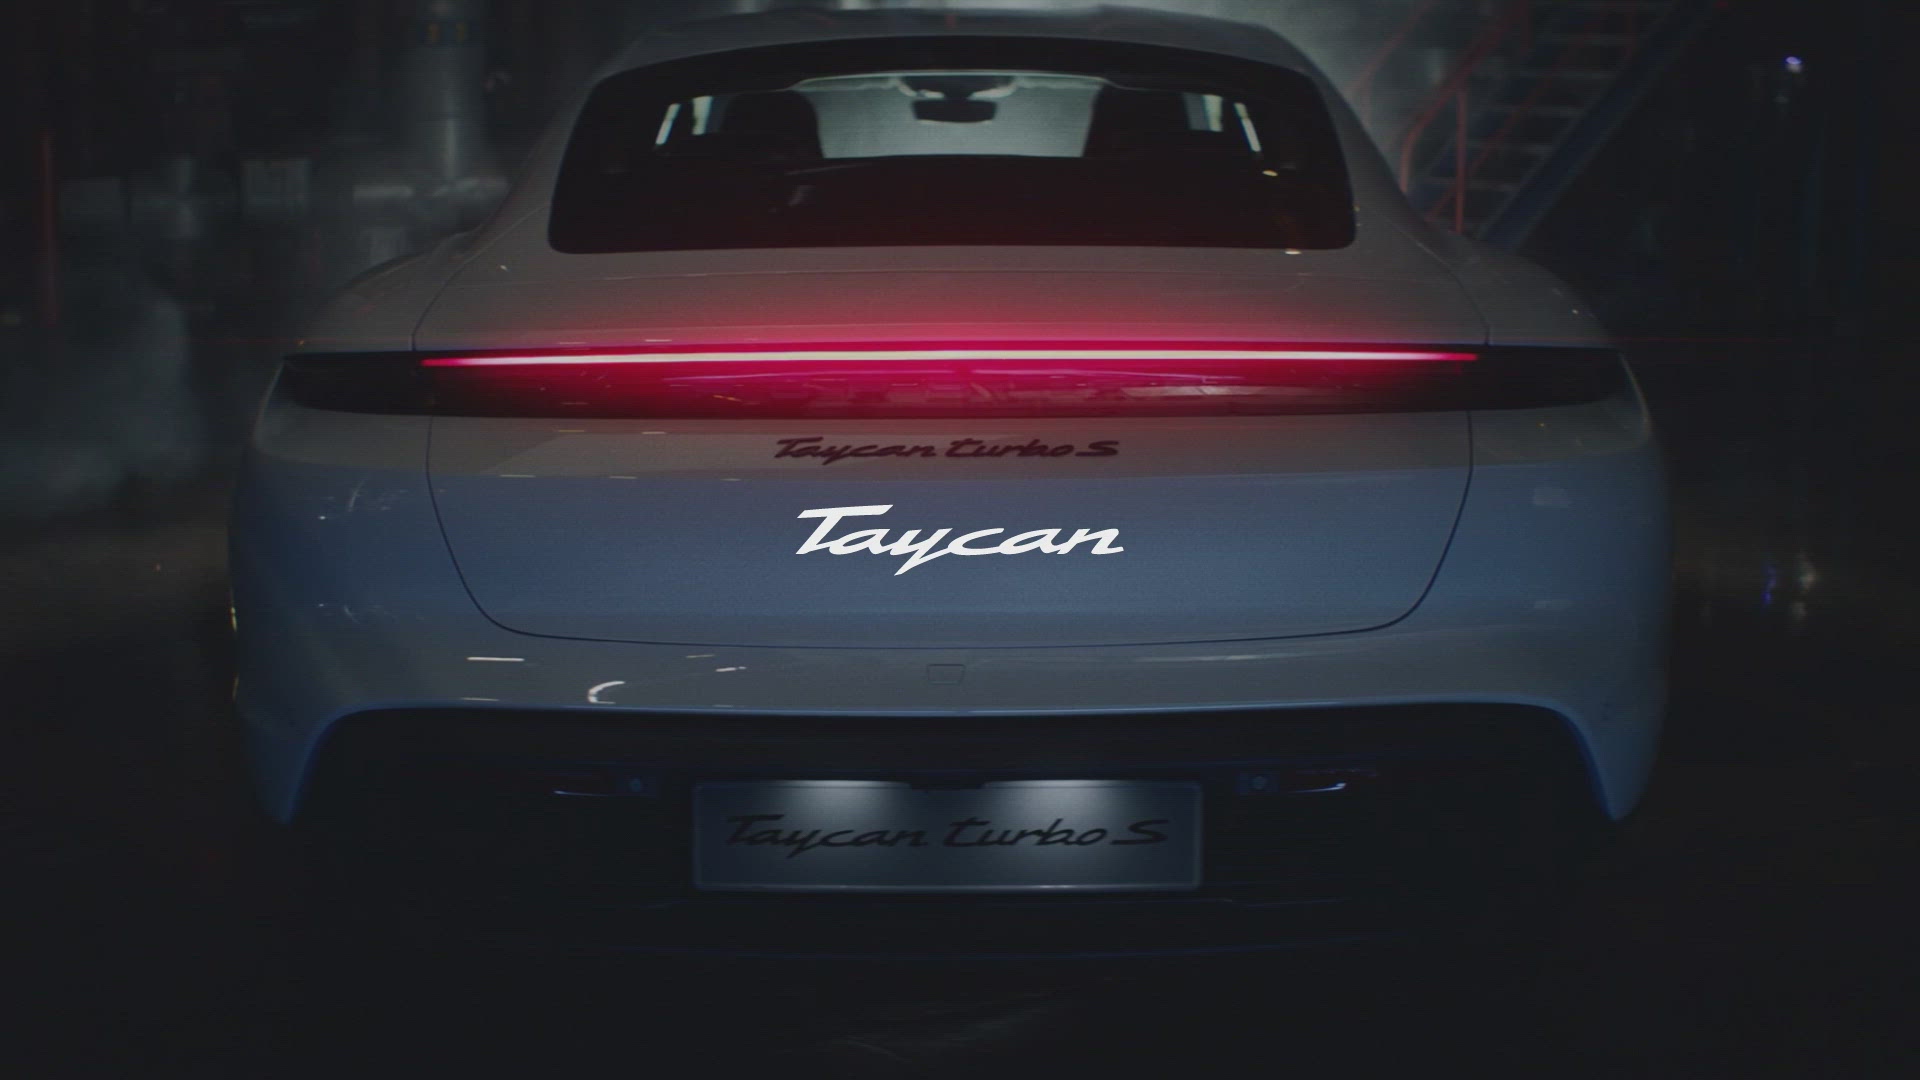 Porsche Taycan - Tesla Targeting